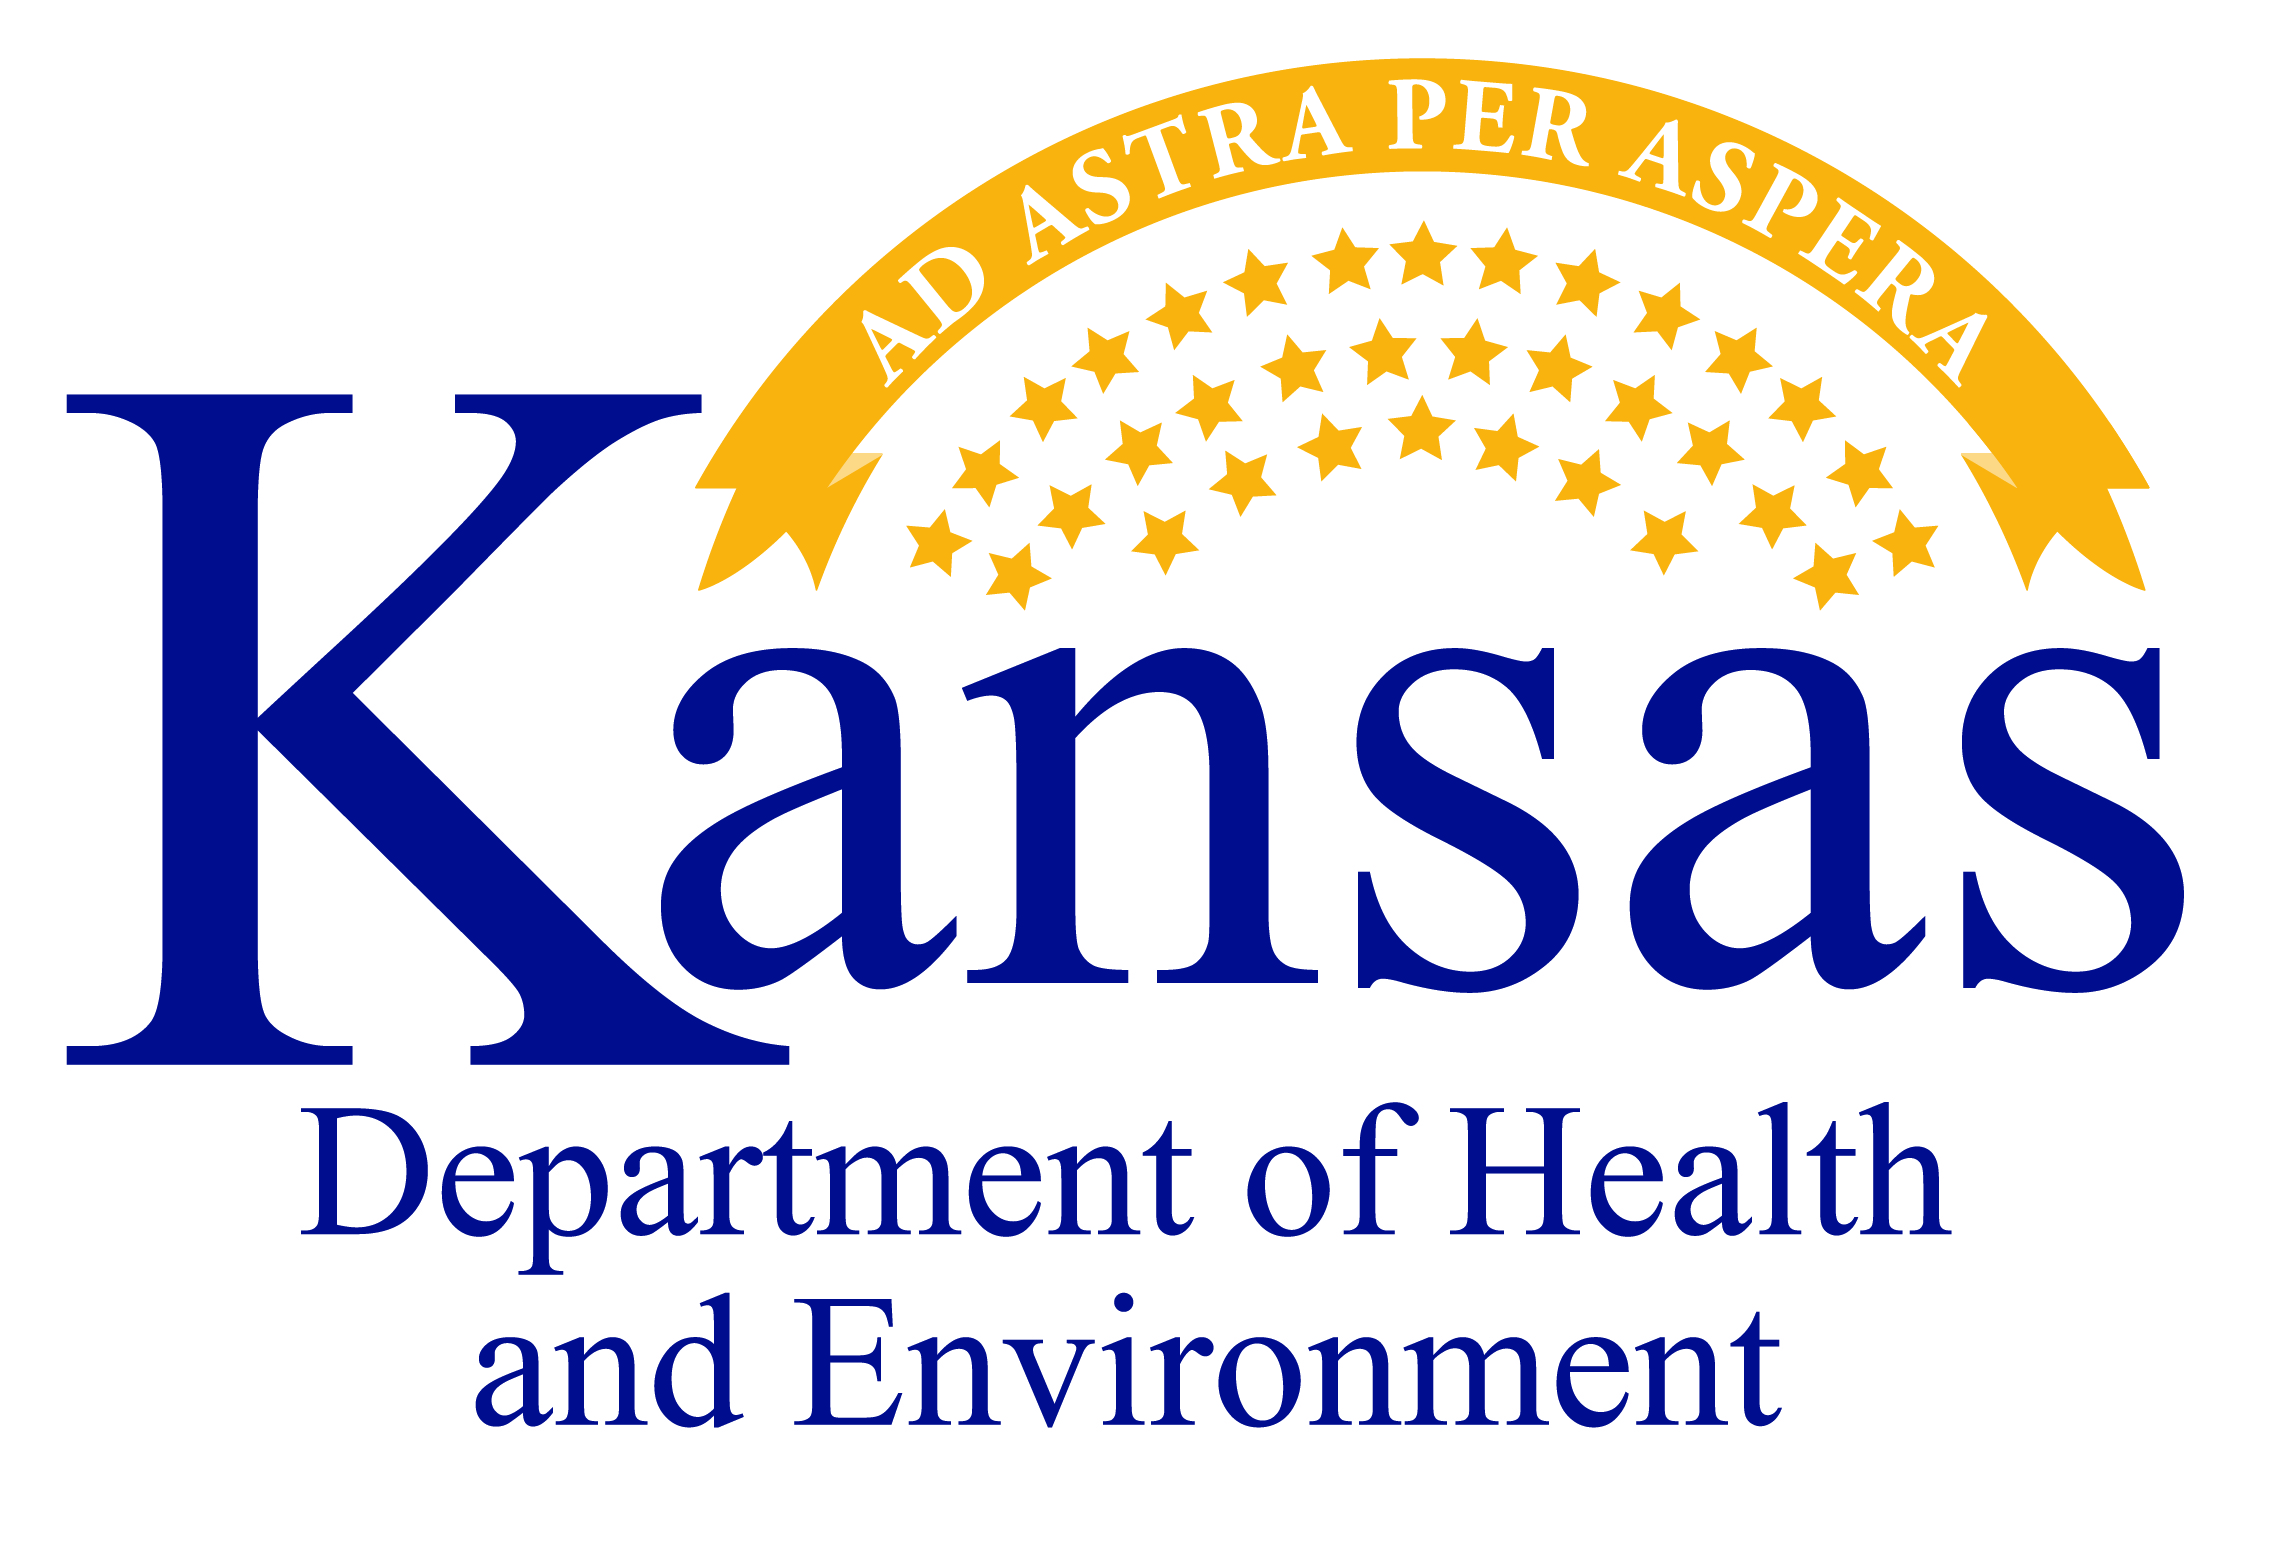 Kansas Department of Health and Environment logo